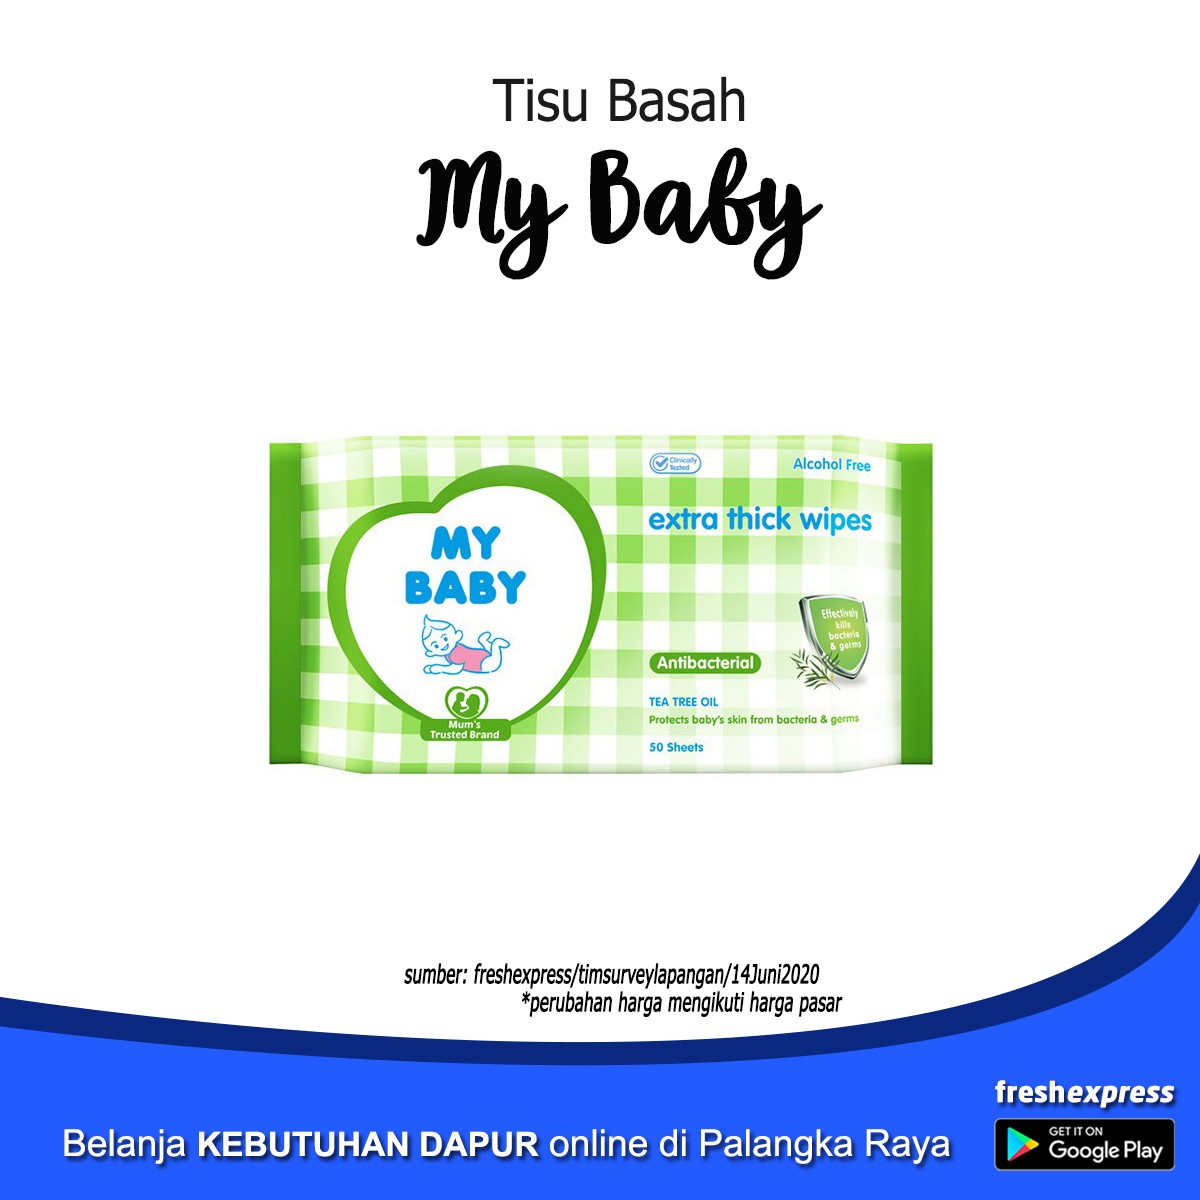 Tisu Basah - My Baby